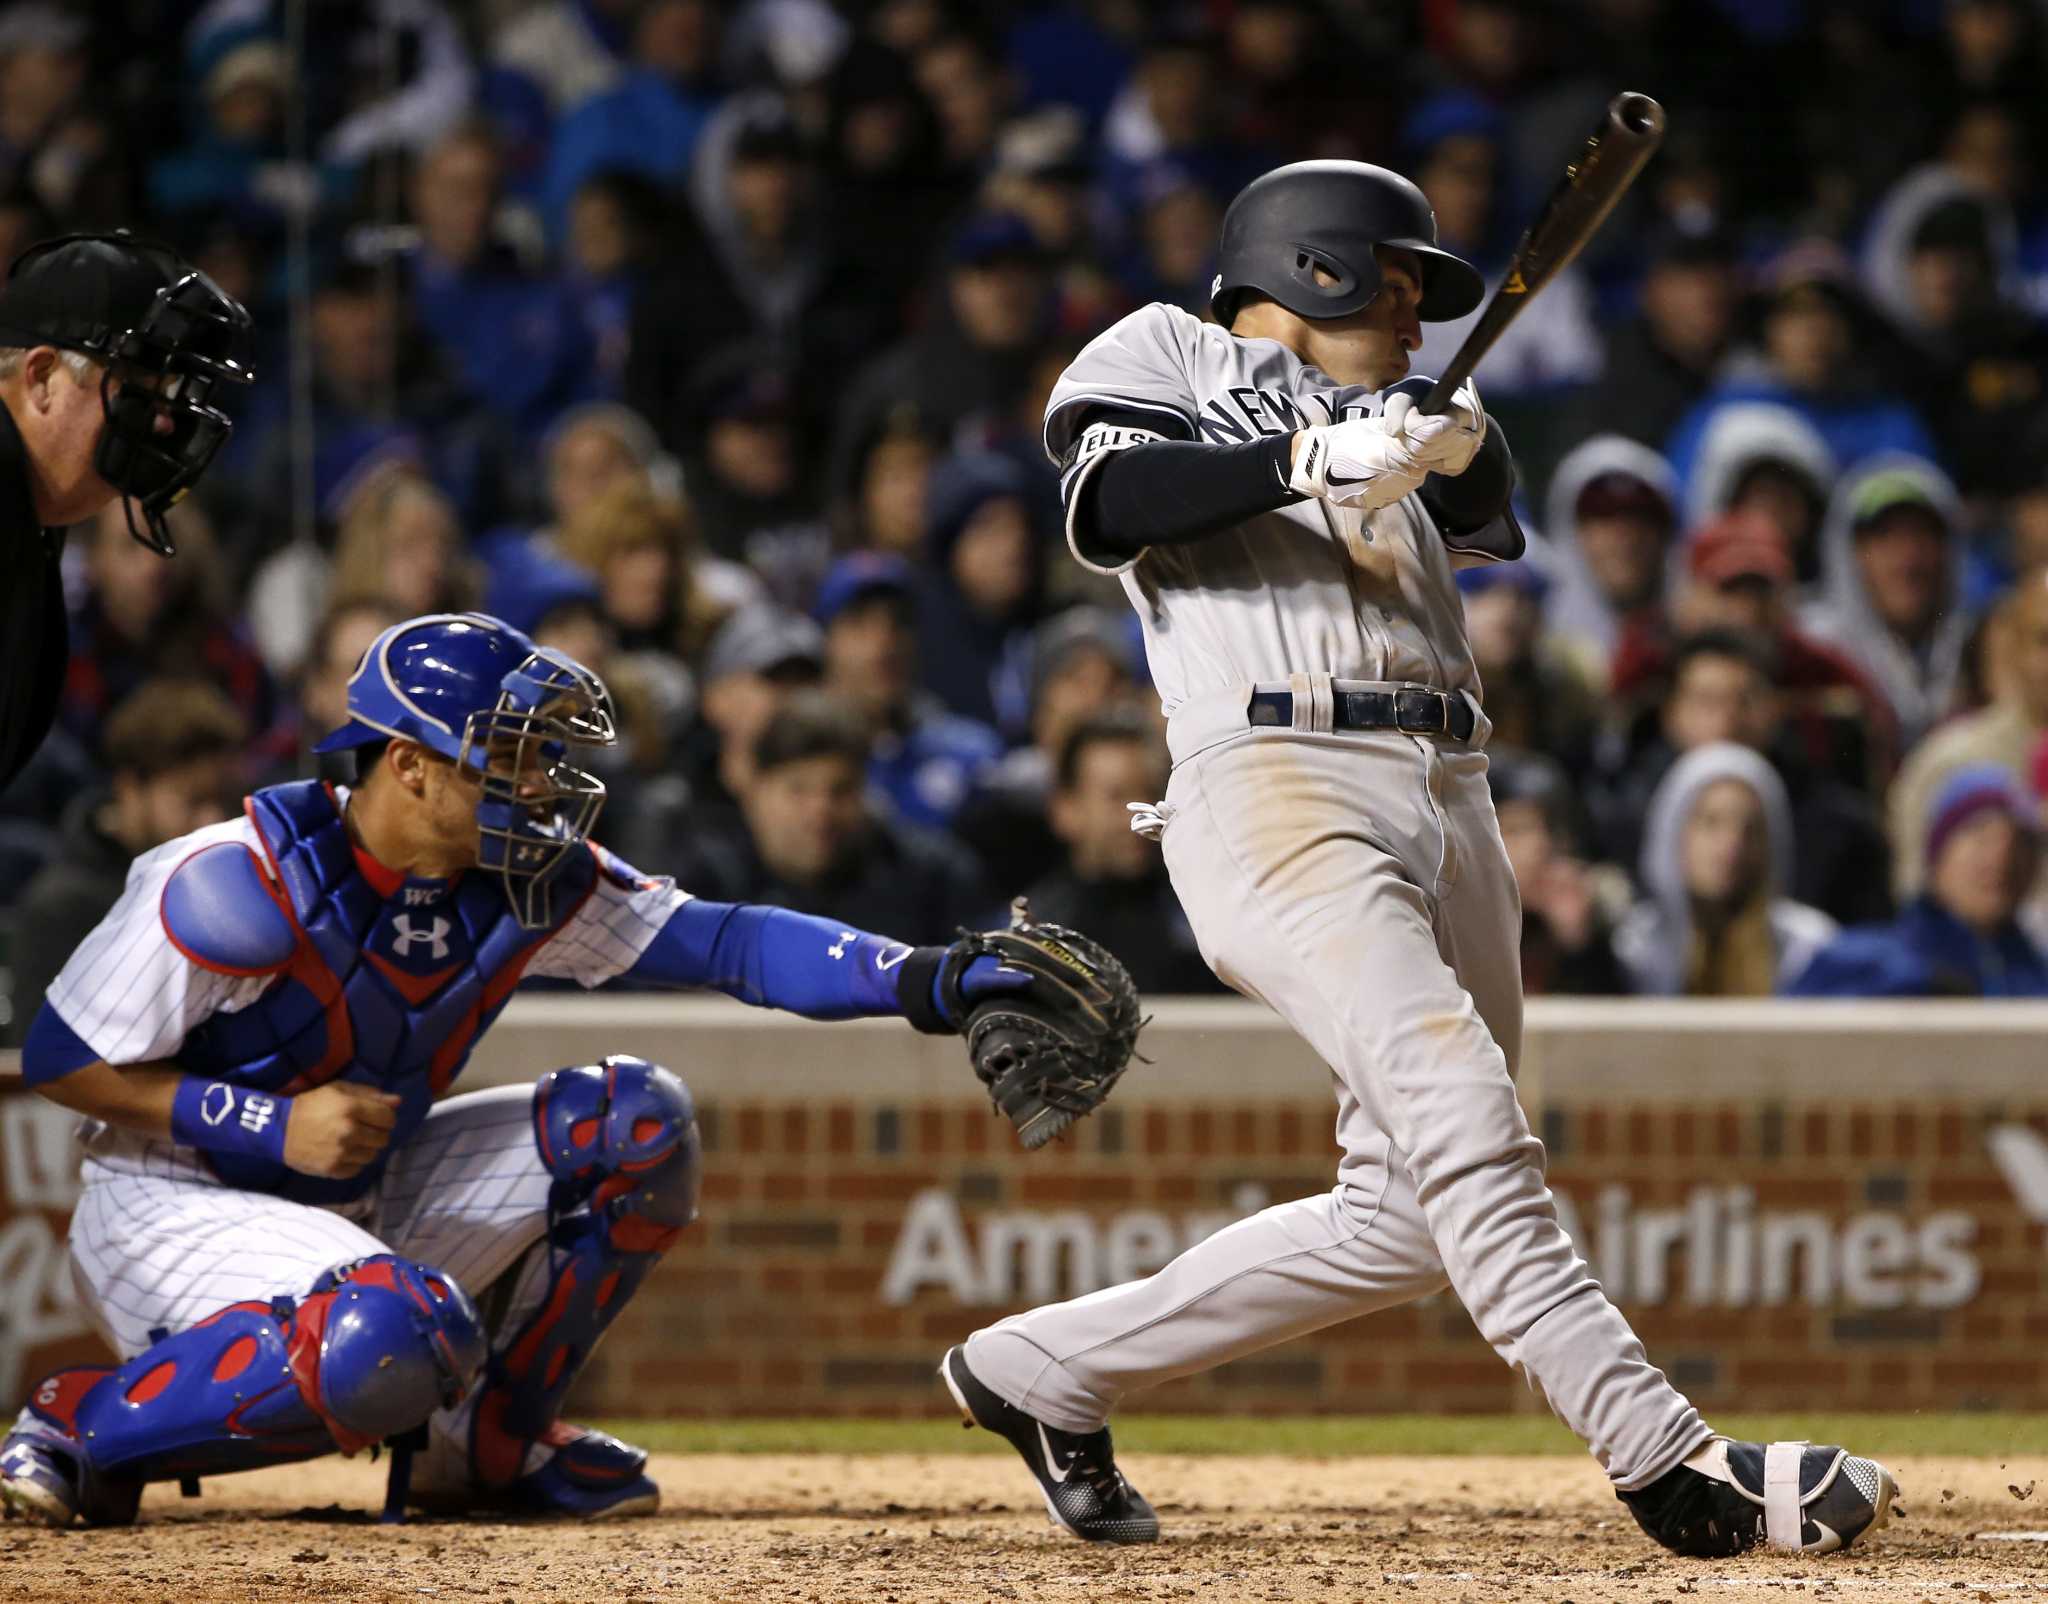 Yankees Defeat Cubs on Ninth-Inning Home Run by Brett Gardner